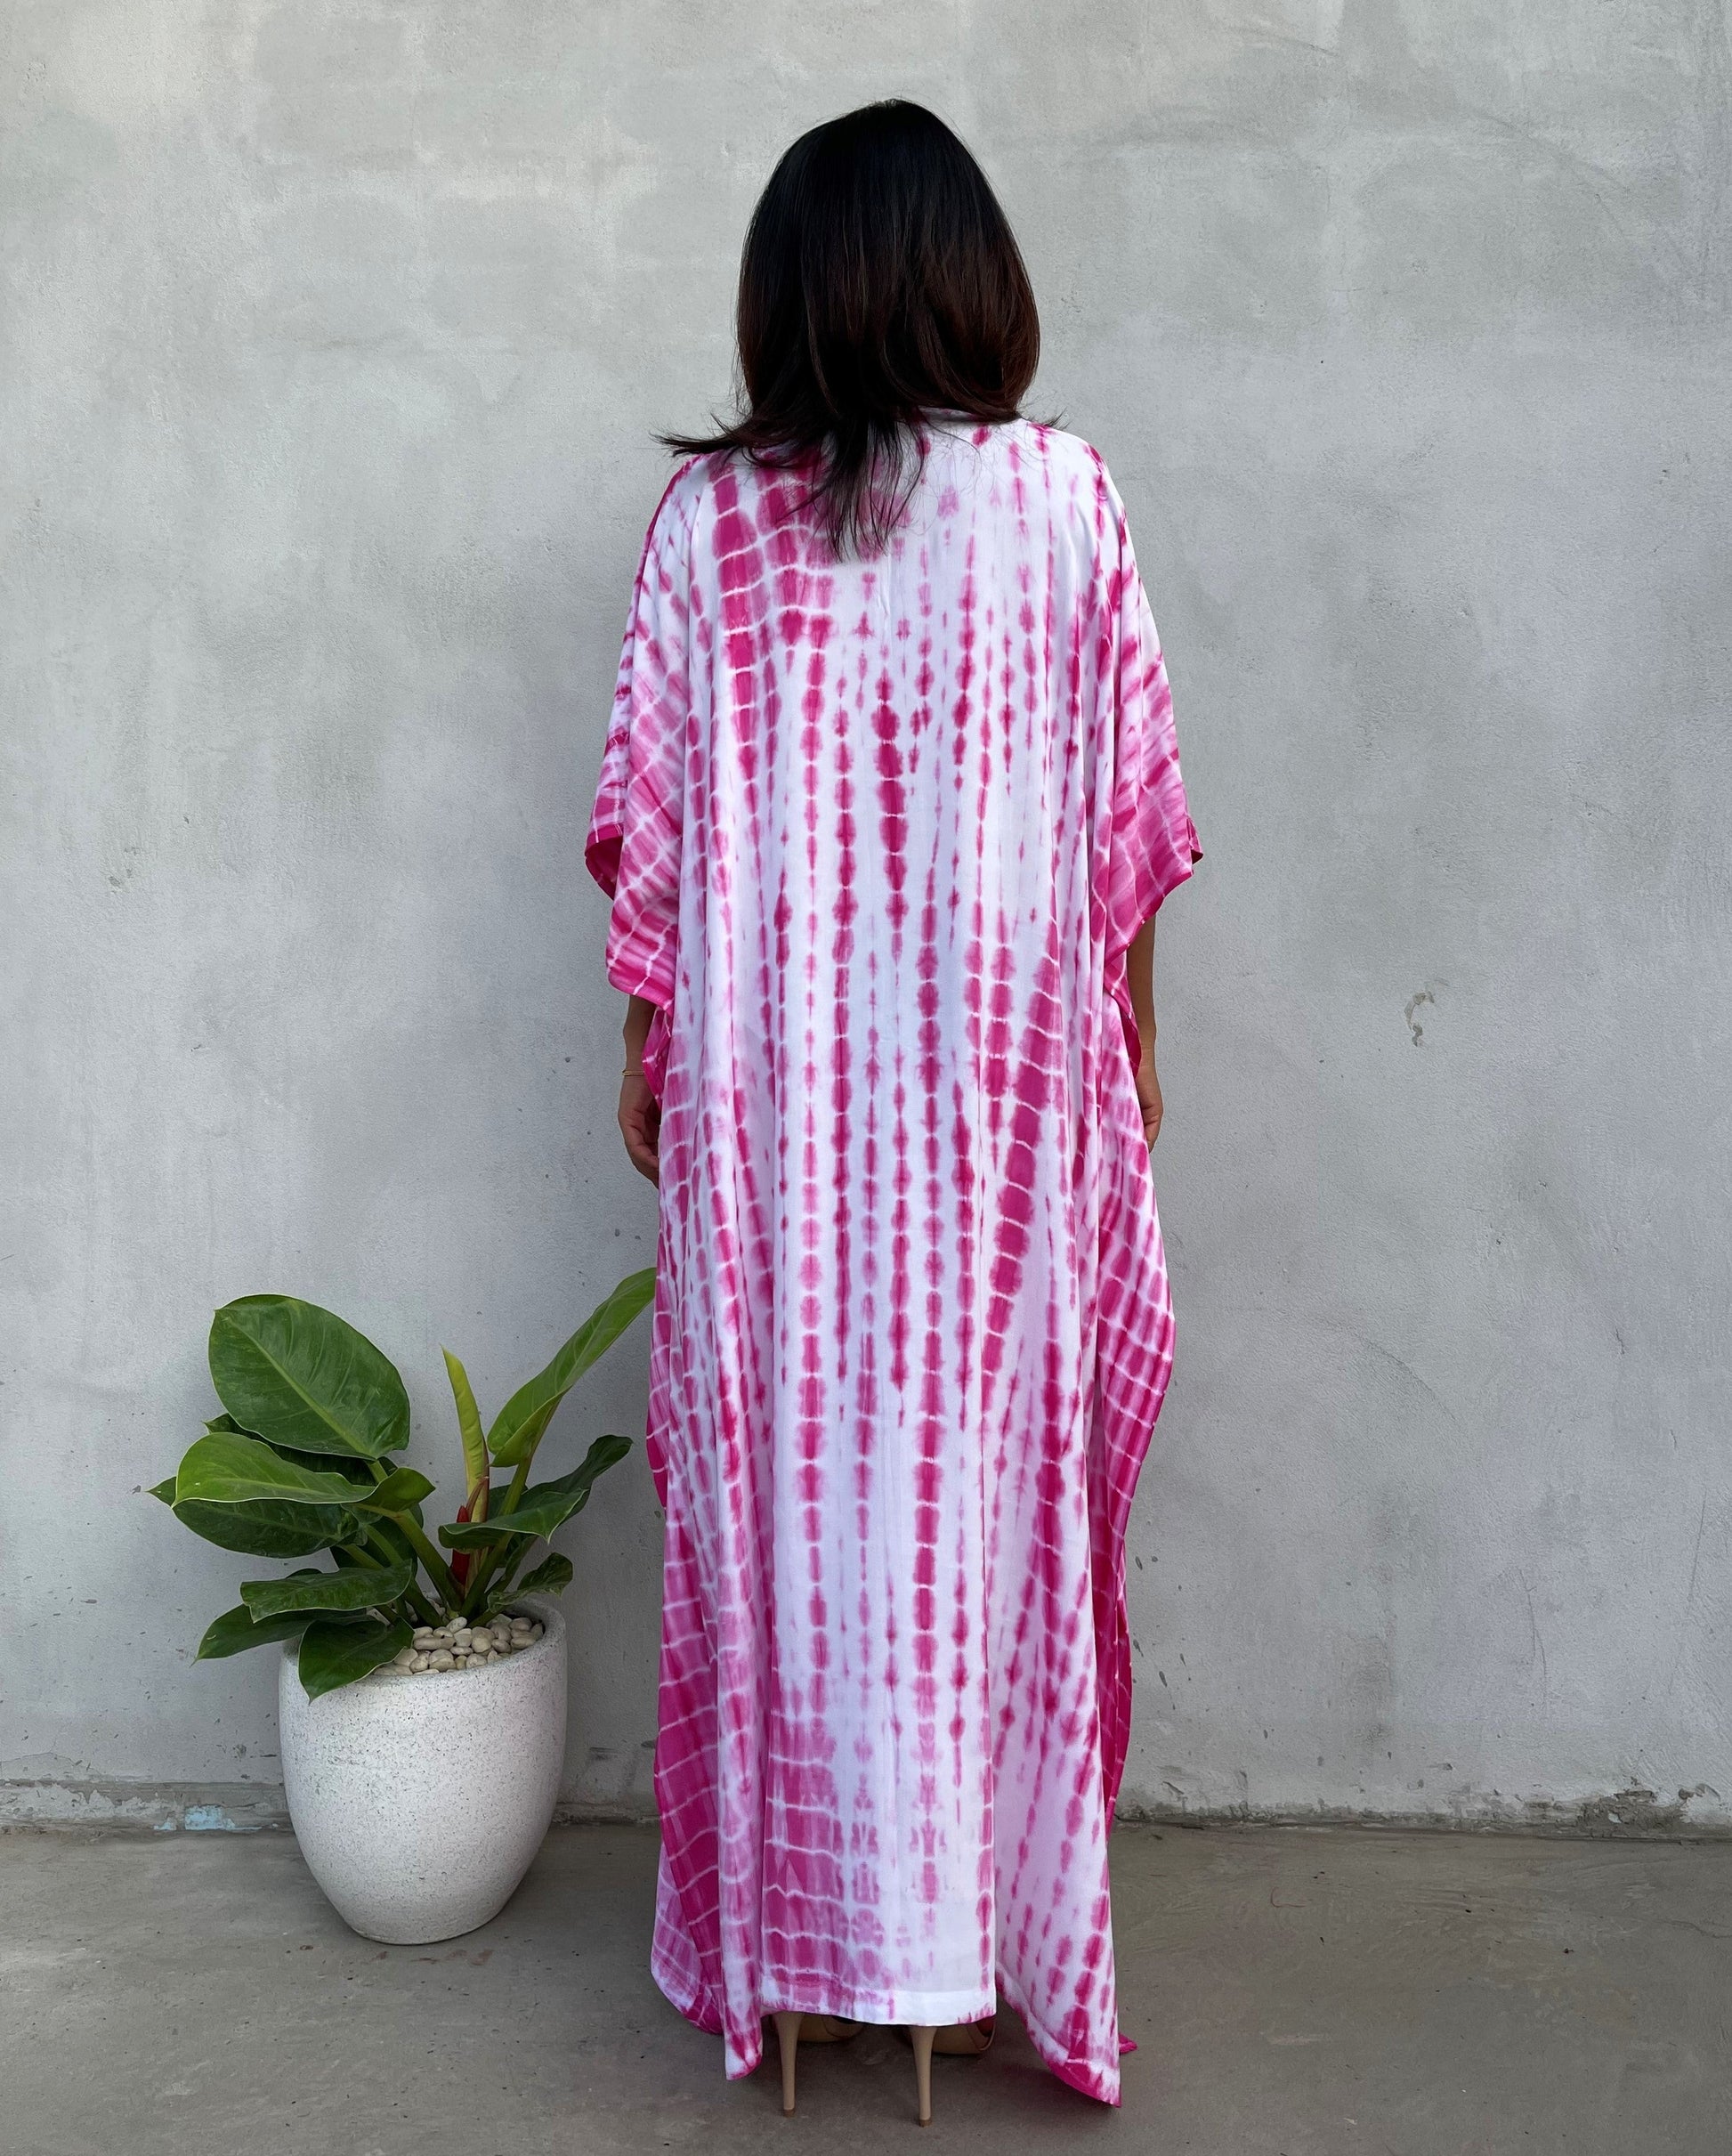 MALA handworks Eva Kaftan in White and Pink Tie Dye